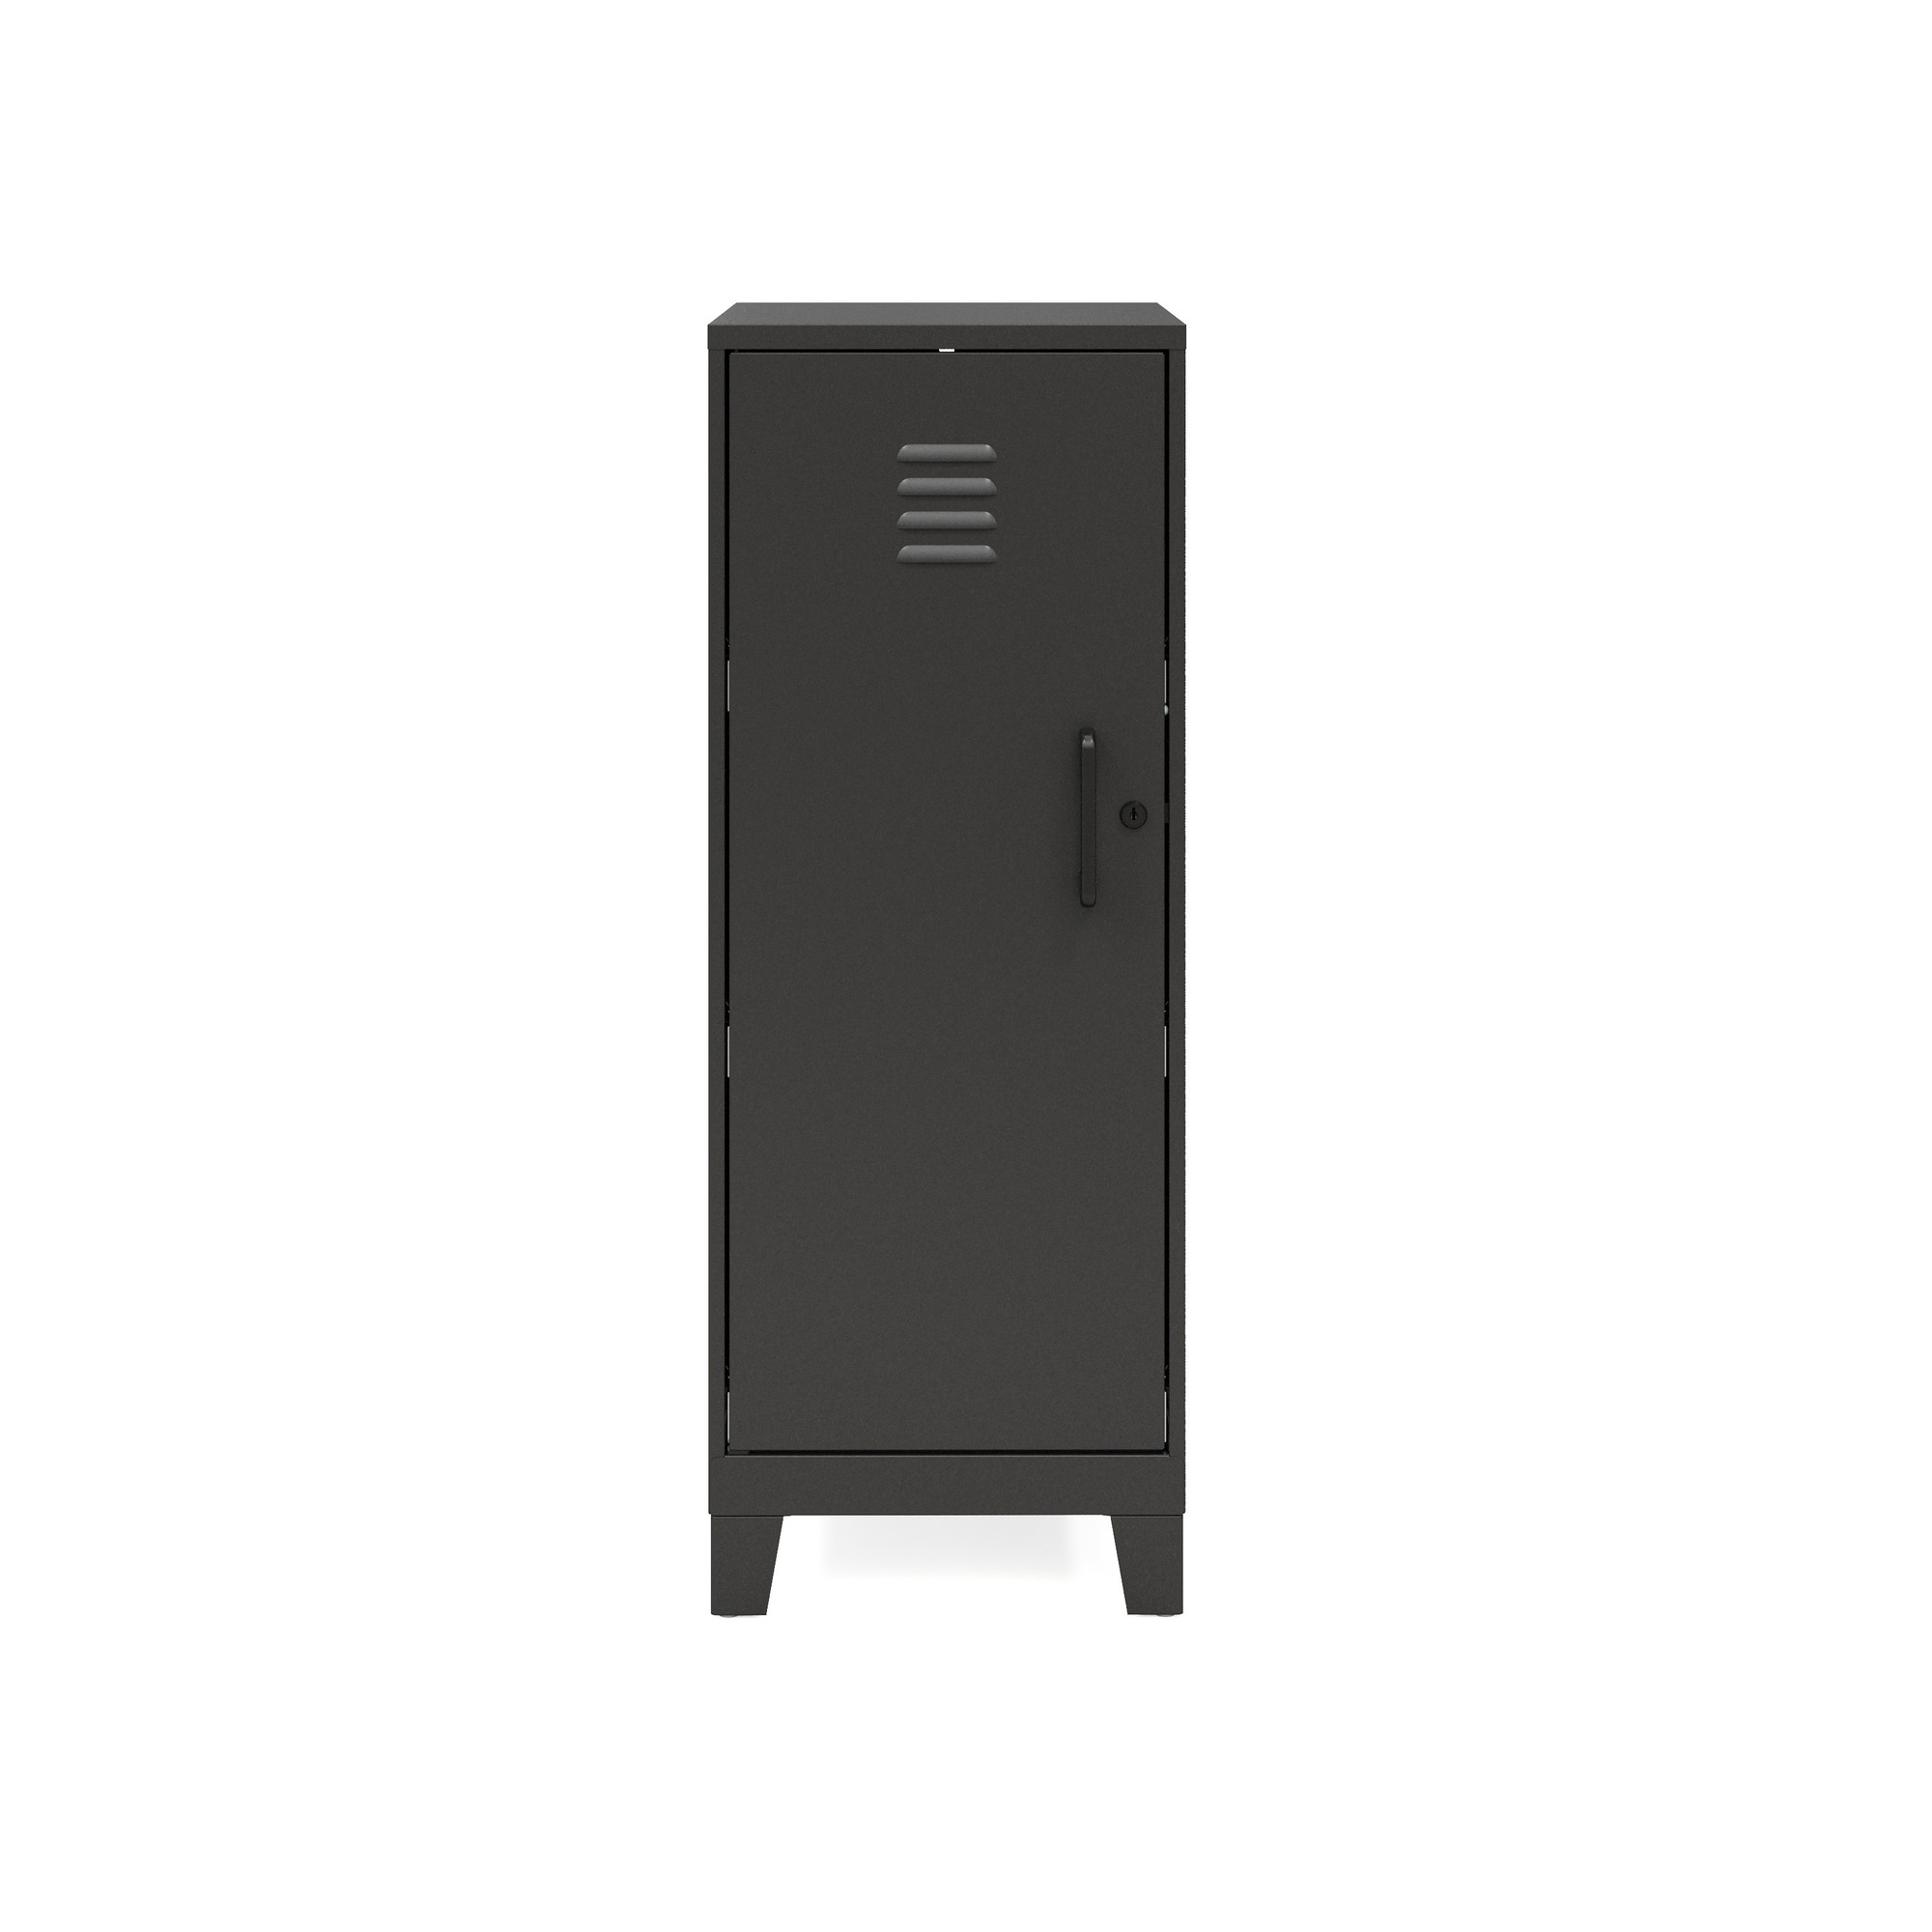 Hirsh Industries, 3 Shelf Storage Locker Cabinet, Height 38.5 in, Width 14.25 in, Color Black, Model 25222